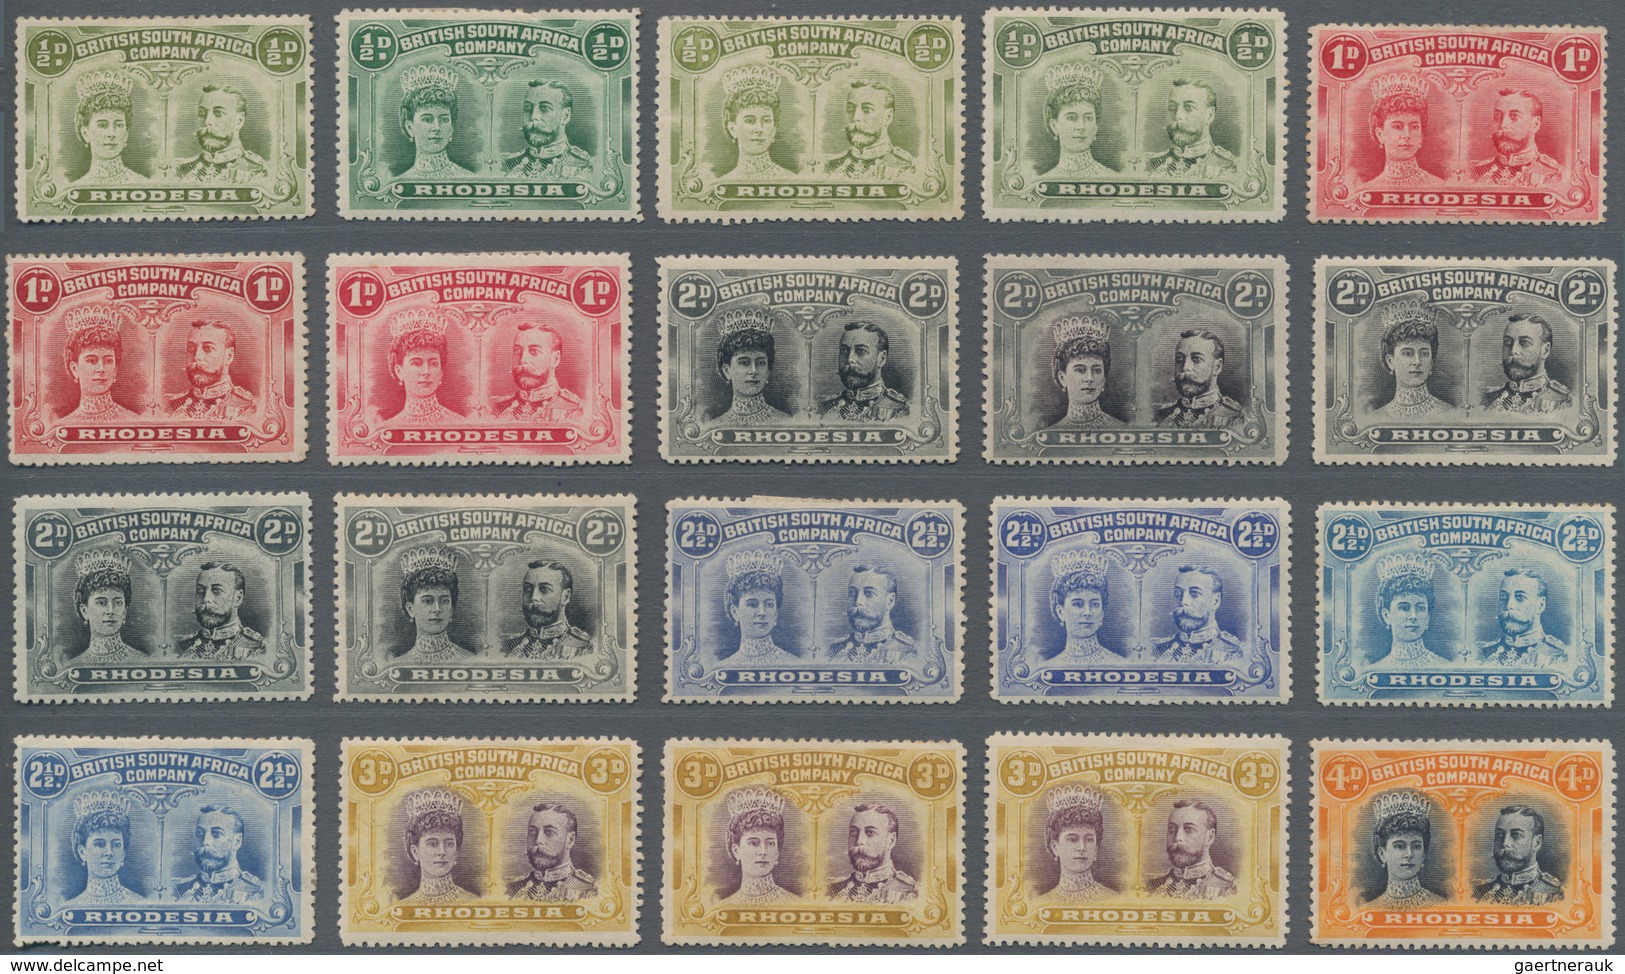 Britische Südafrika-Gesellschaft: 1910-13 'Double Heads': More than complete set of 73 mint stamps,